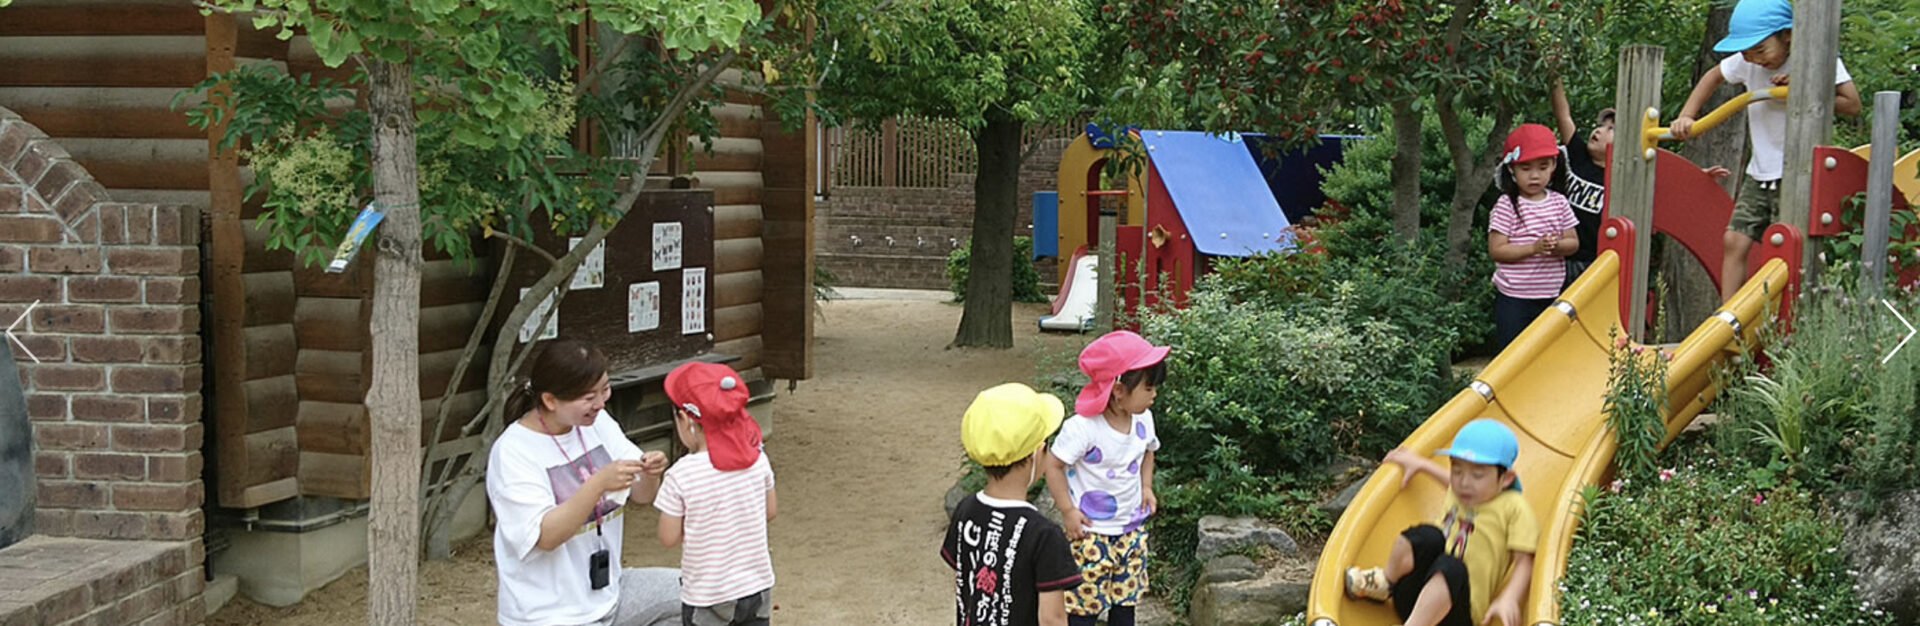 sakai-higashimozu-kodomoen-kindergarten